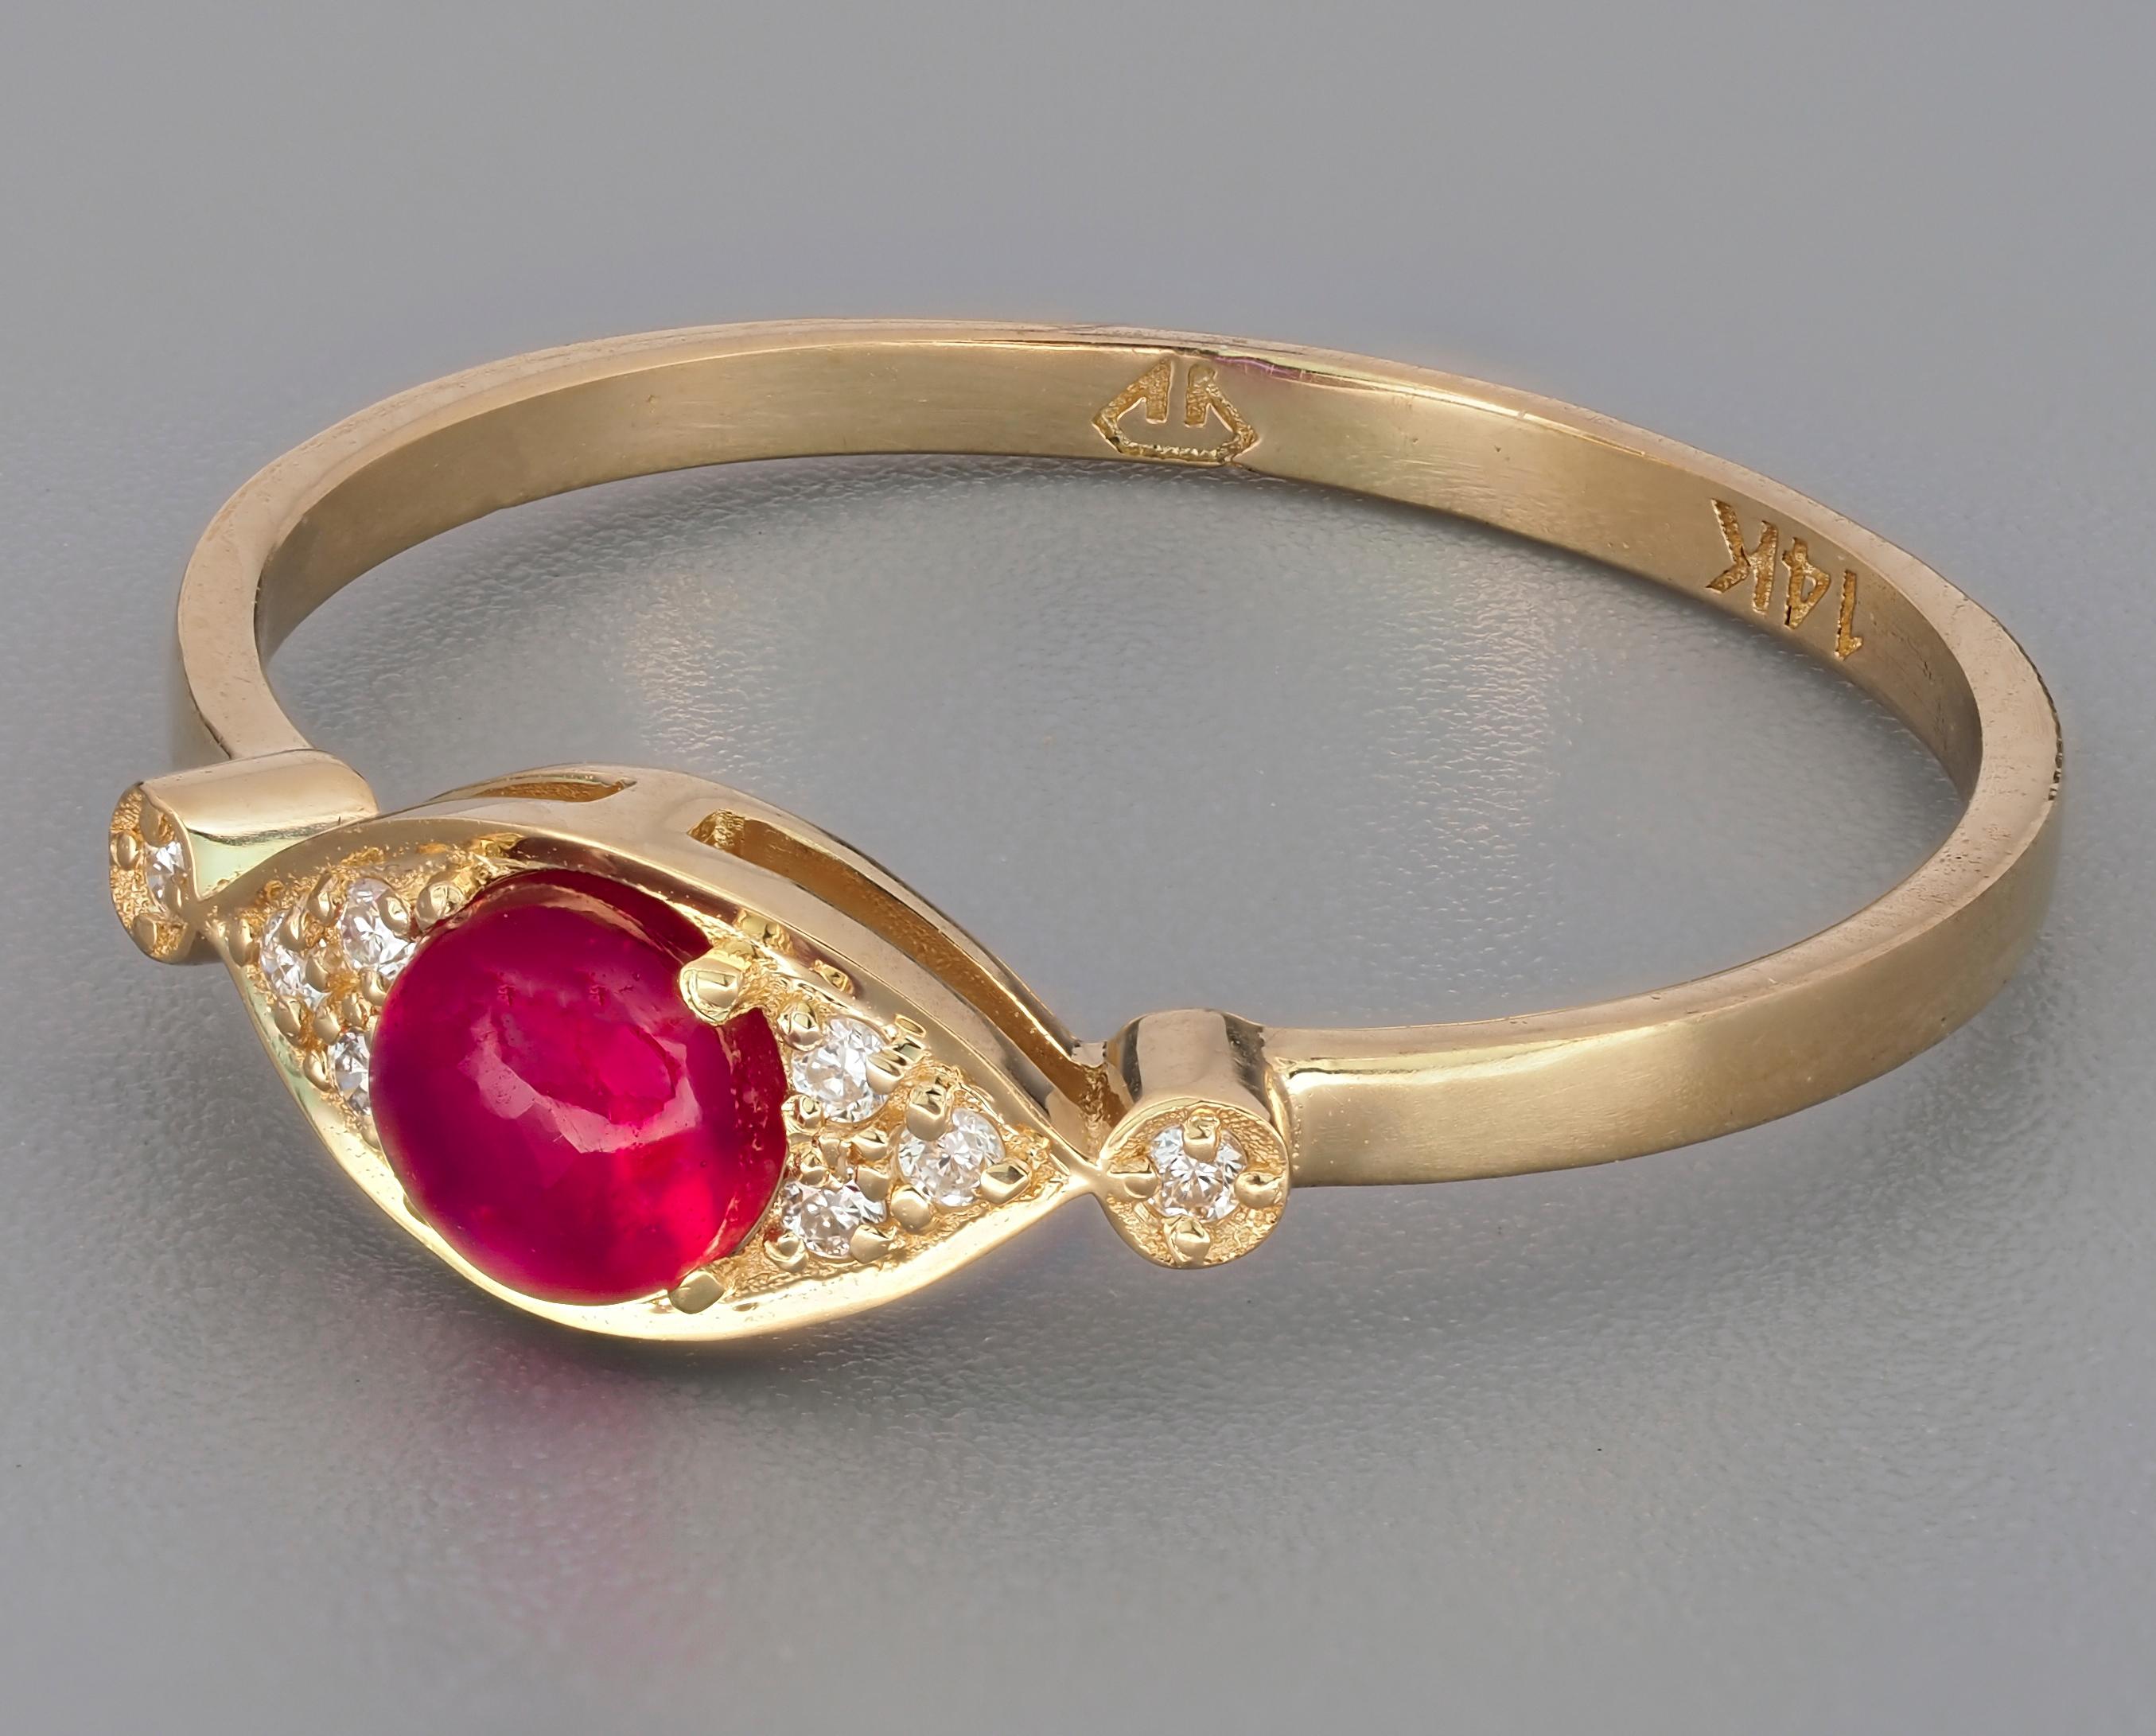 For Sale:  Ruby 14 karat ring.  Evil Eye Ring. July birthstone ruby ring 5